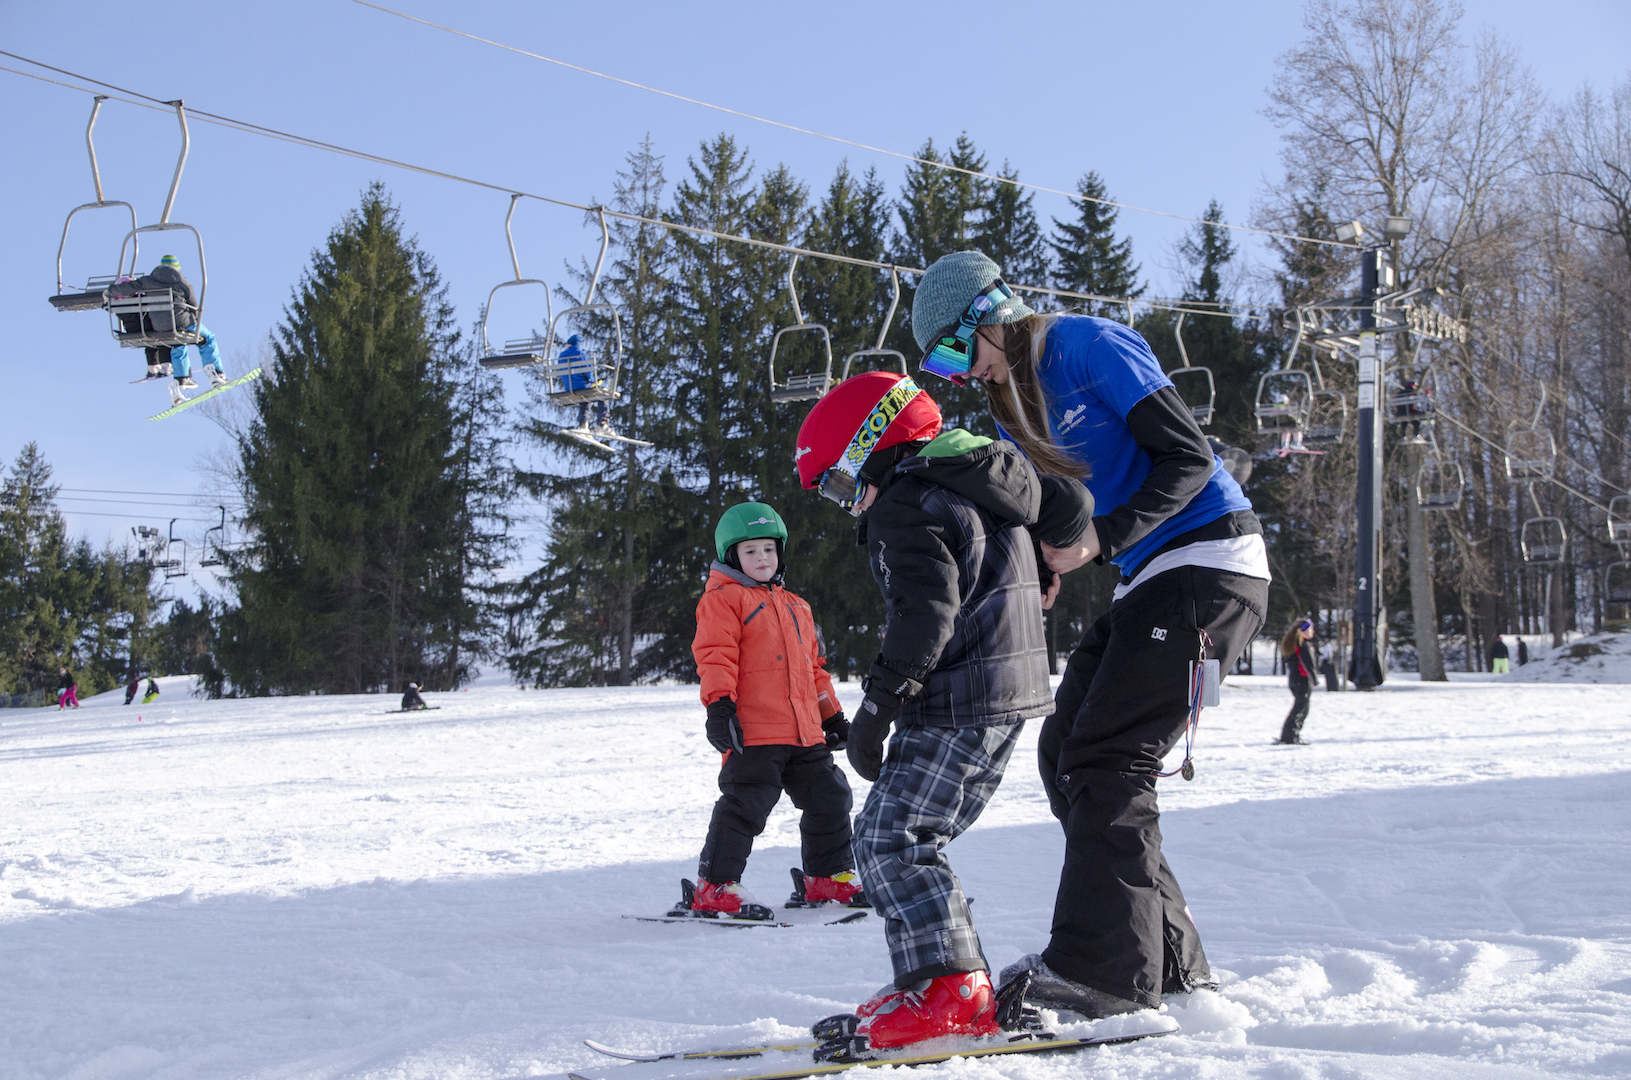 Children's Programs at Snow Trails